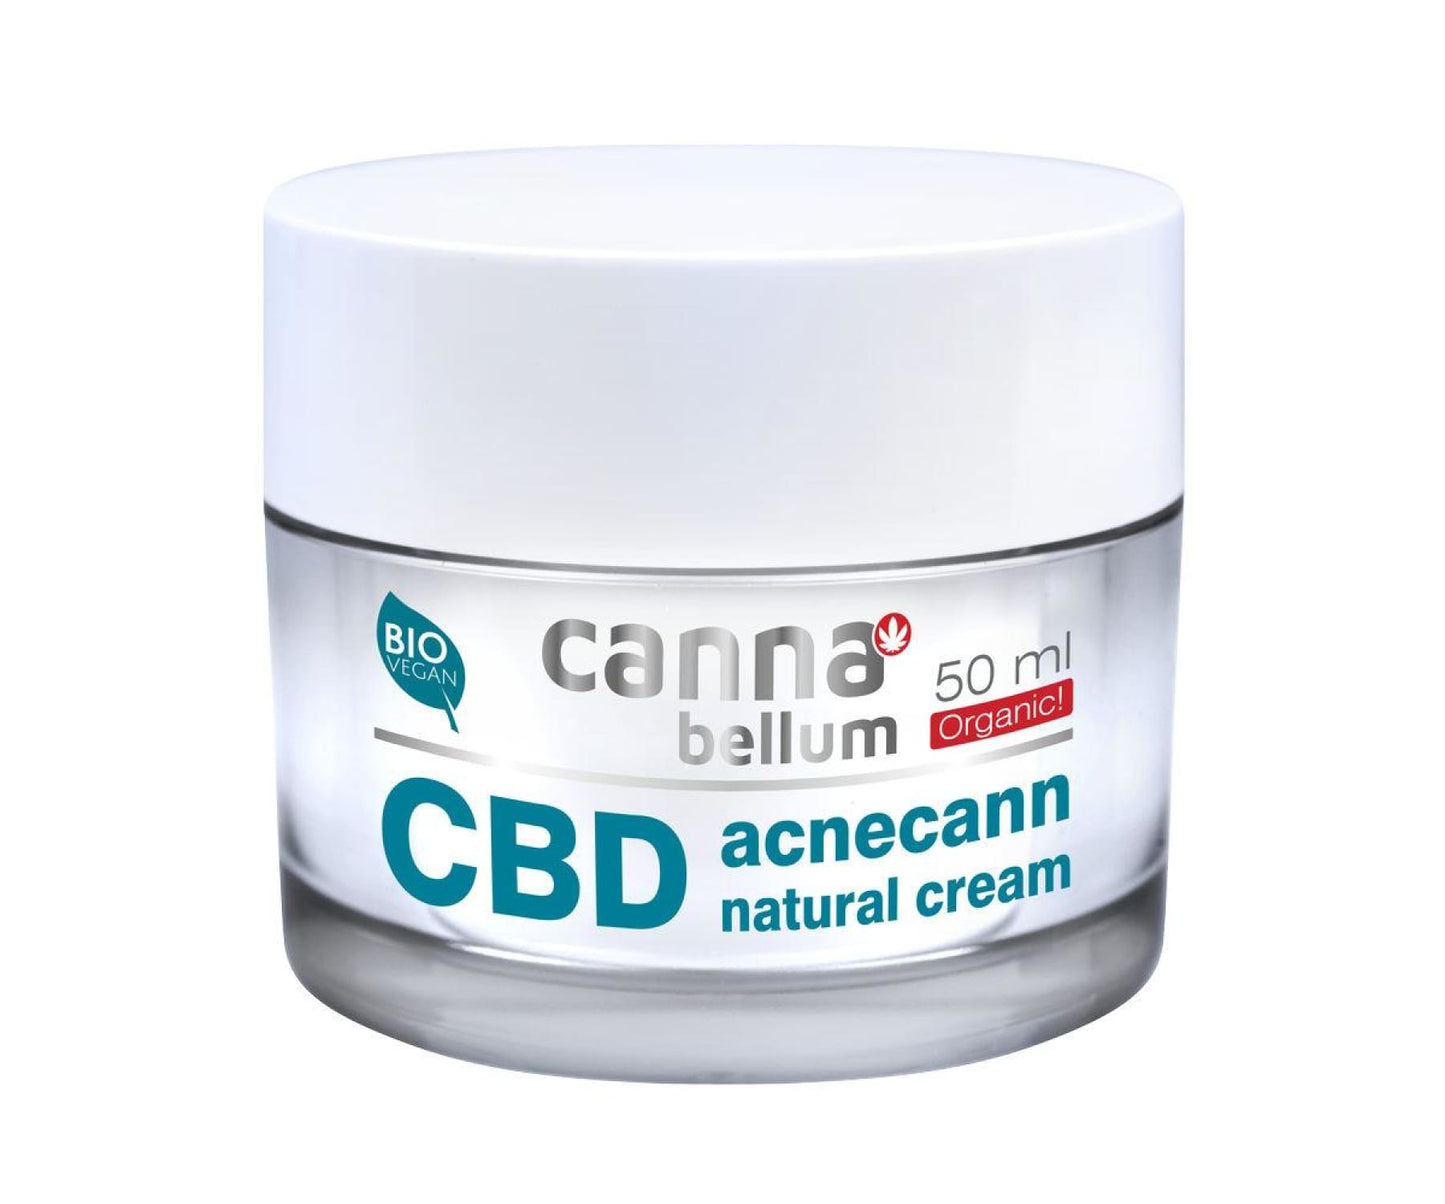 Hanf und Hemp - Cannabellum CBD acnecann natural cream 50ml